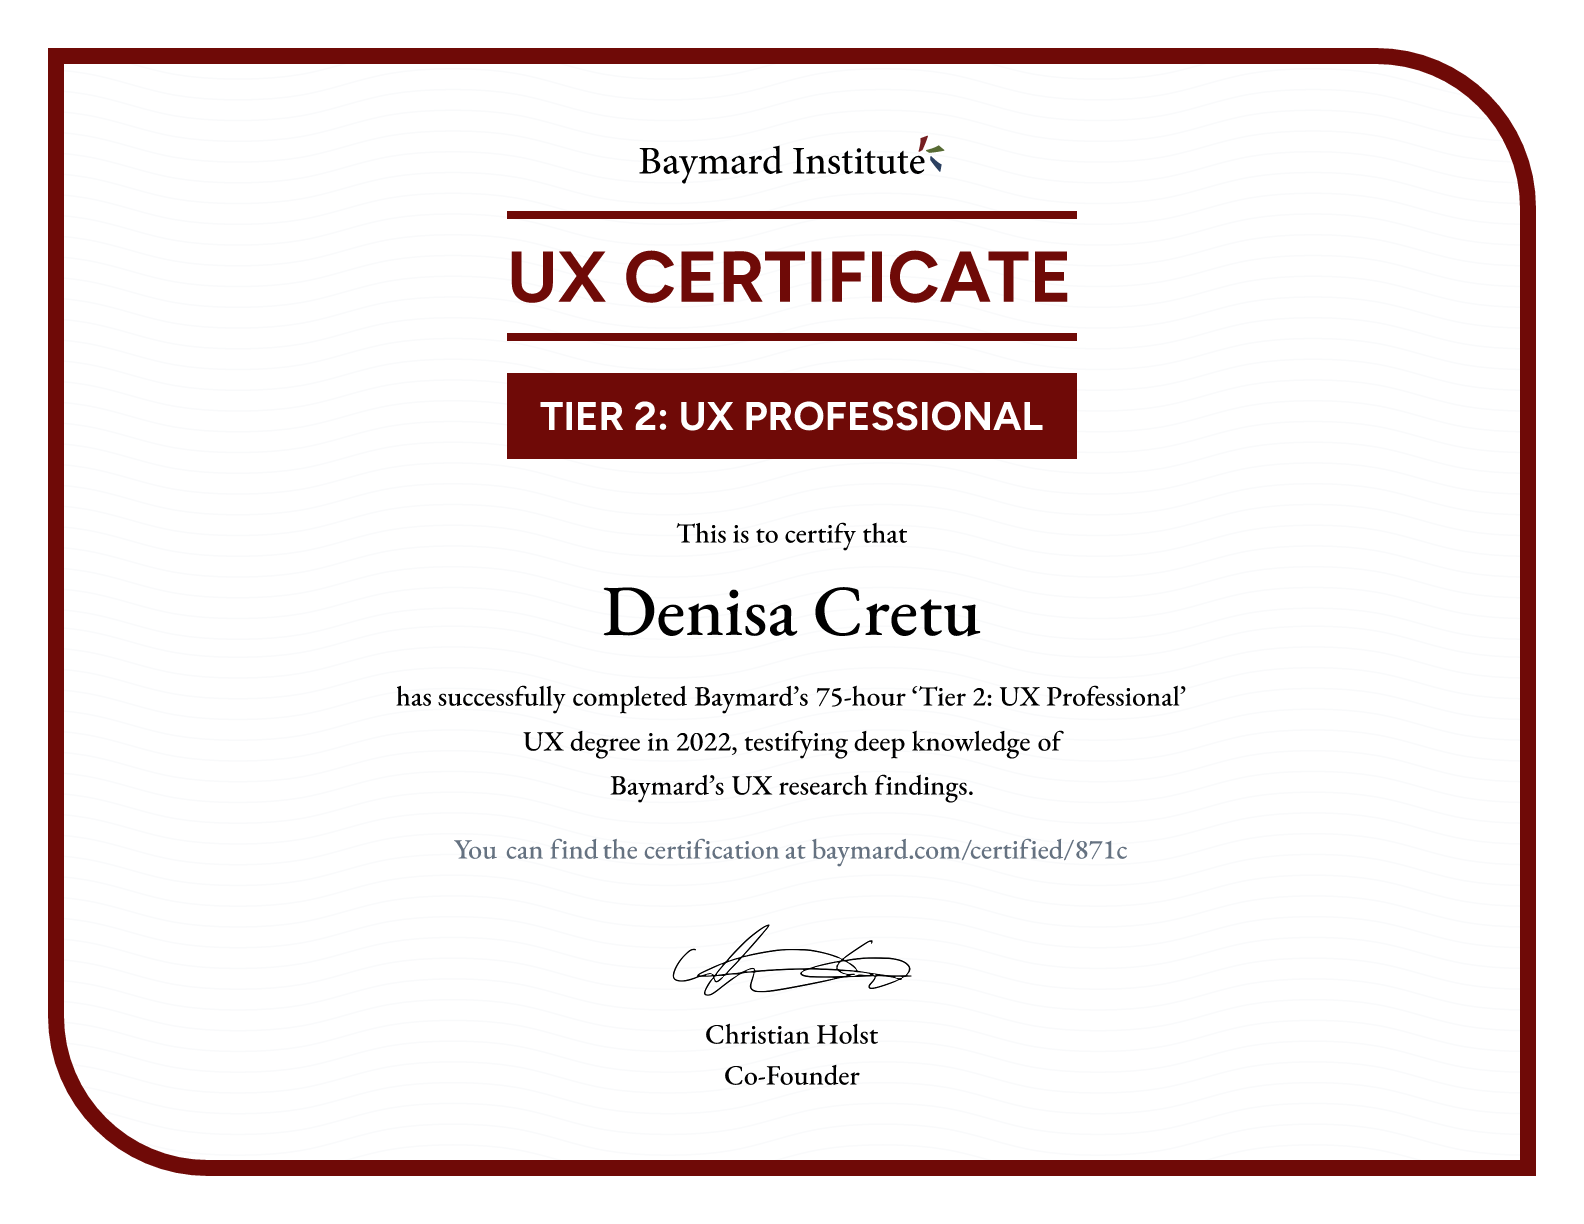 Denisa Cretu’s certificate